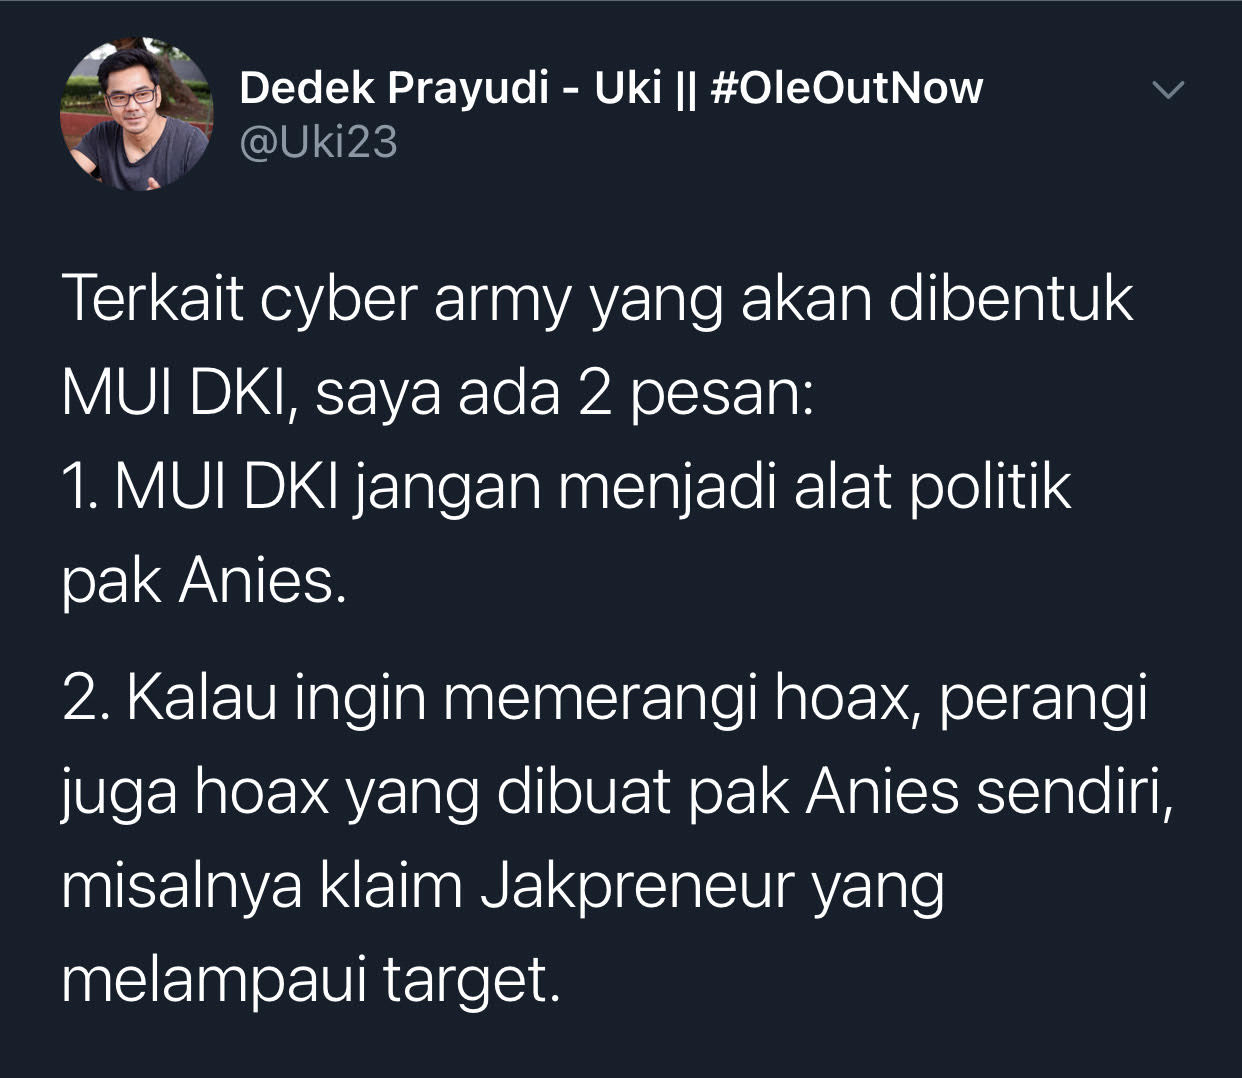 Cuitan Dedek Prayudi yang memberikan pesan ke MUI DKI Jakarta terkait pembentuk cyber army untuk bela ulama dan Anies Baswedan.